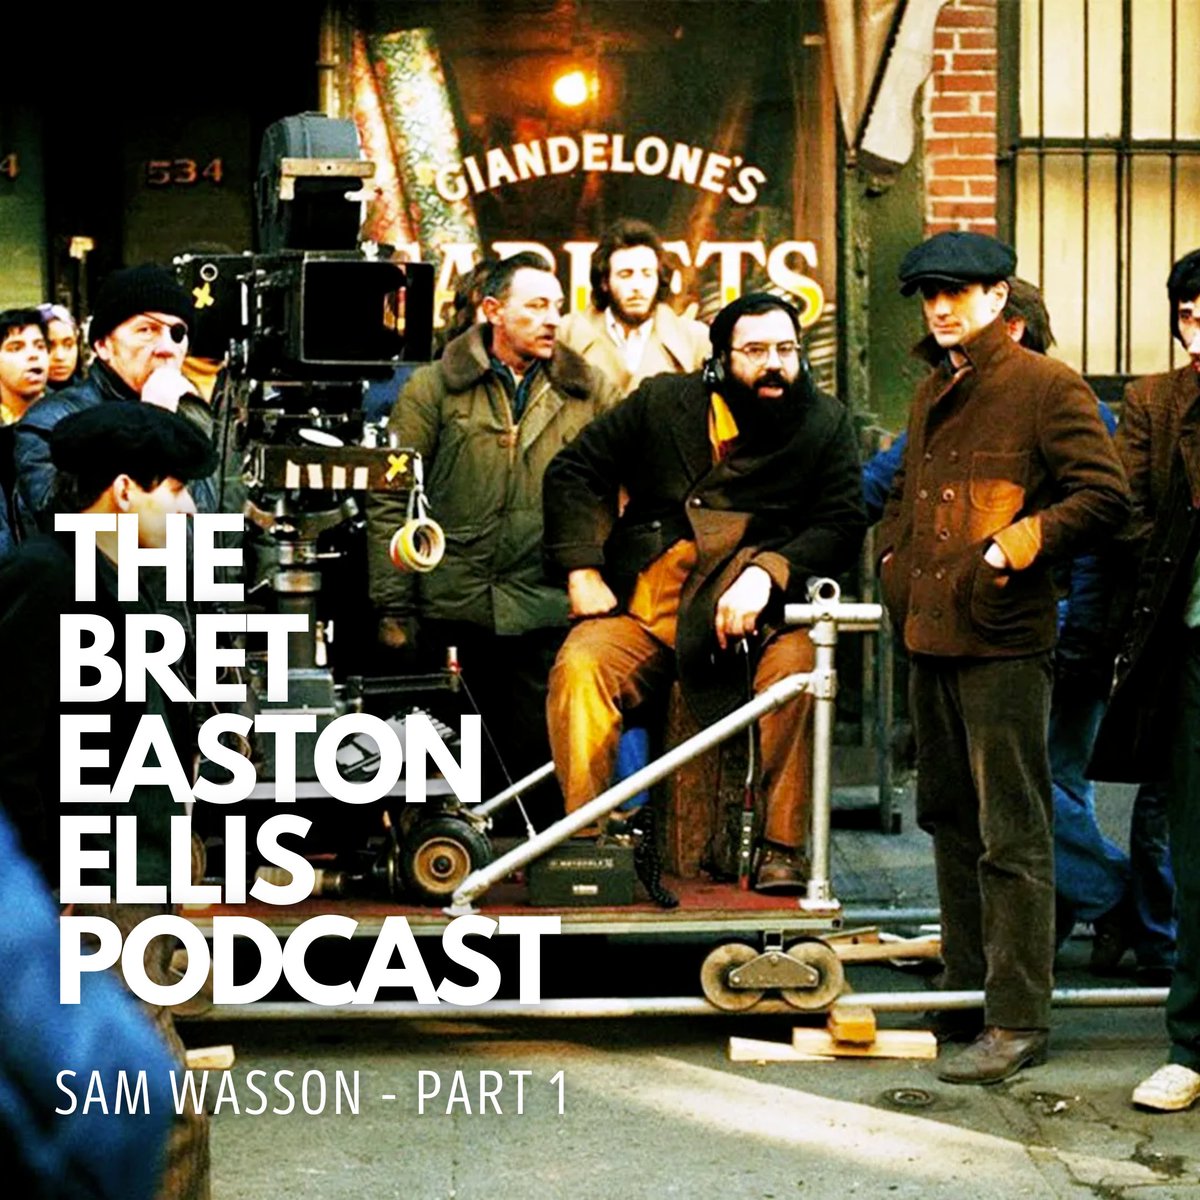 The Bret Easton Ellis Podcast - Season 7, Episode 44 - Sam Wasson (Part 1 of 2). bit.ly/bees7e44